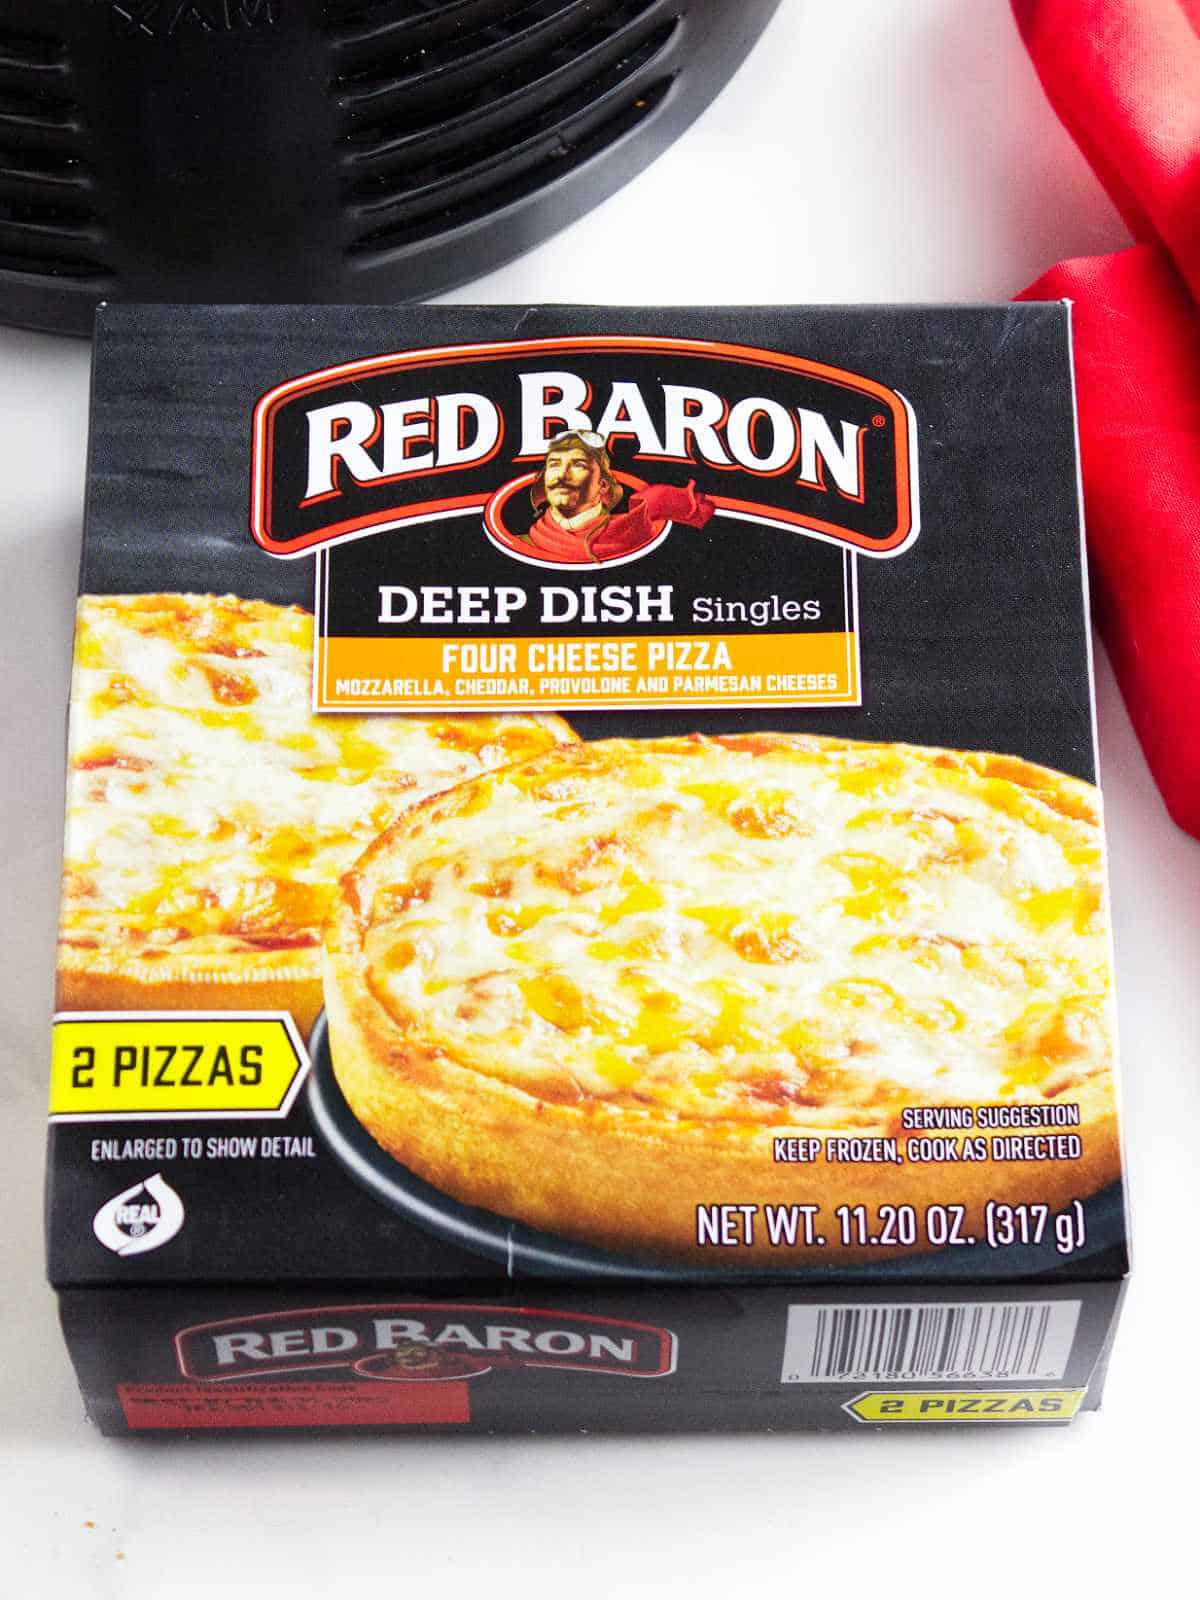 Red Baron deep dish frozen pizza singles in original box.